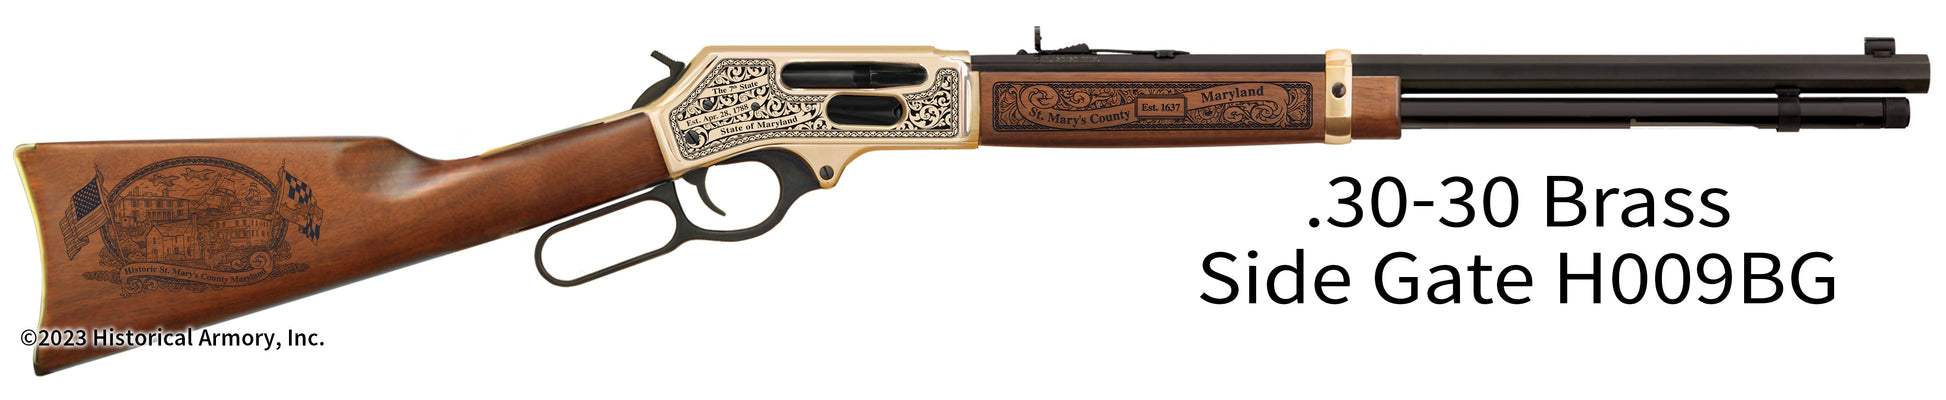 St. Marys County Maryland Engraved Henry .30-30 Brass Side Gate Rifle